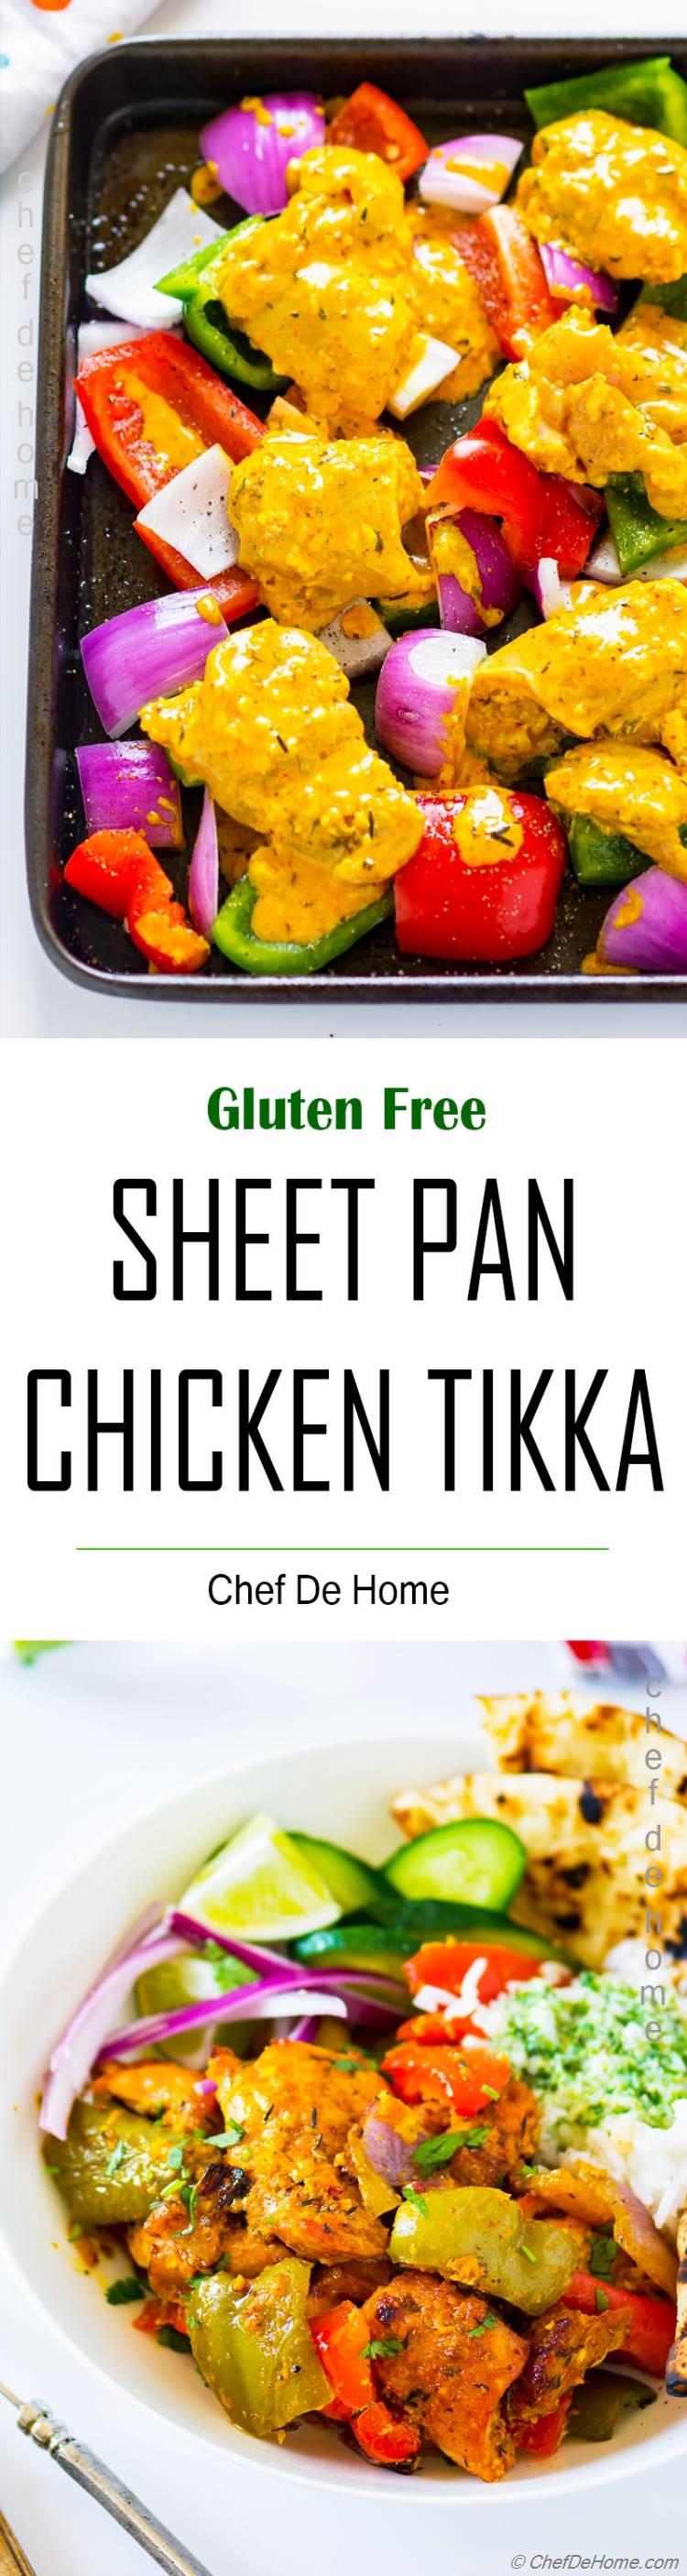 Easy Chicken Tikka Recipe ready on sheet pan for homemade Indian chicken dinner